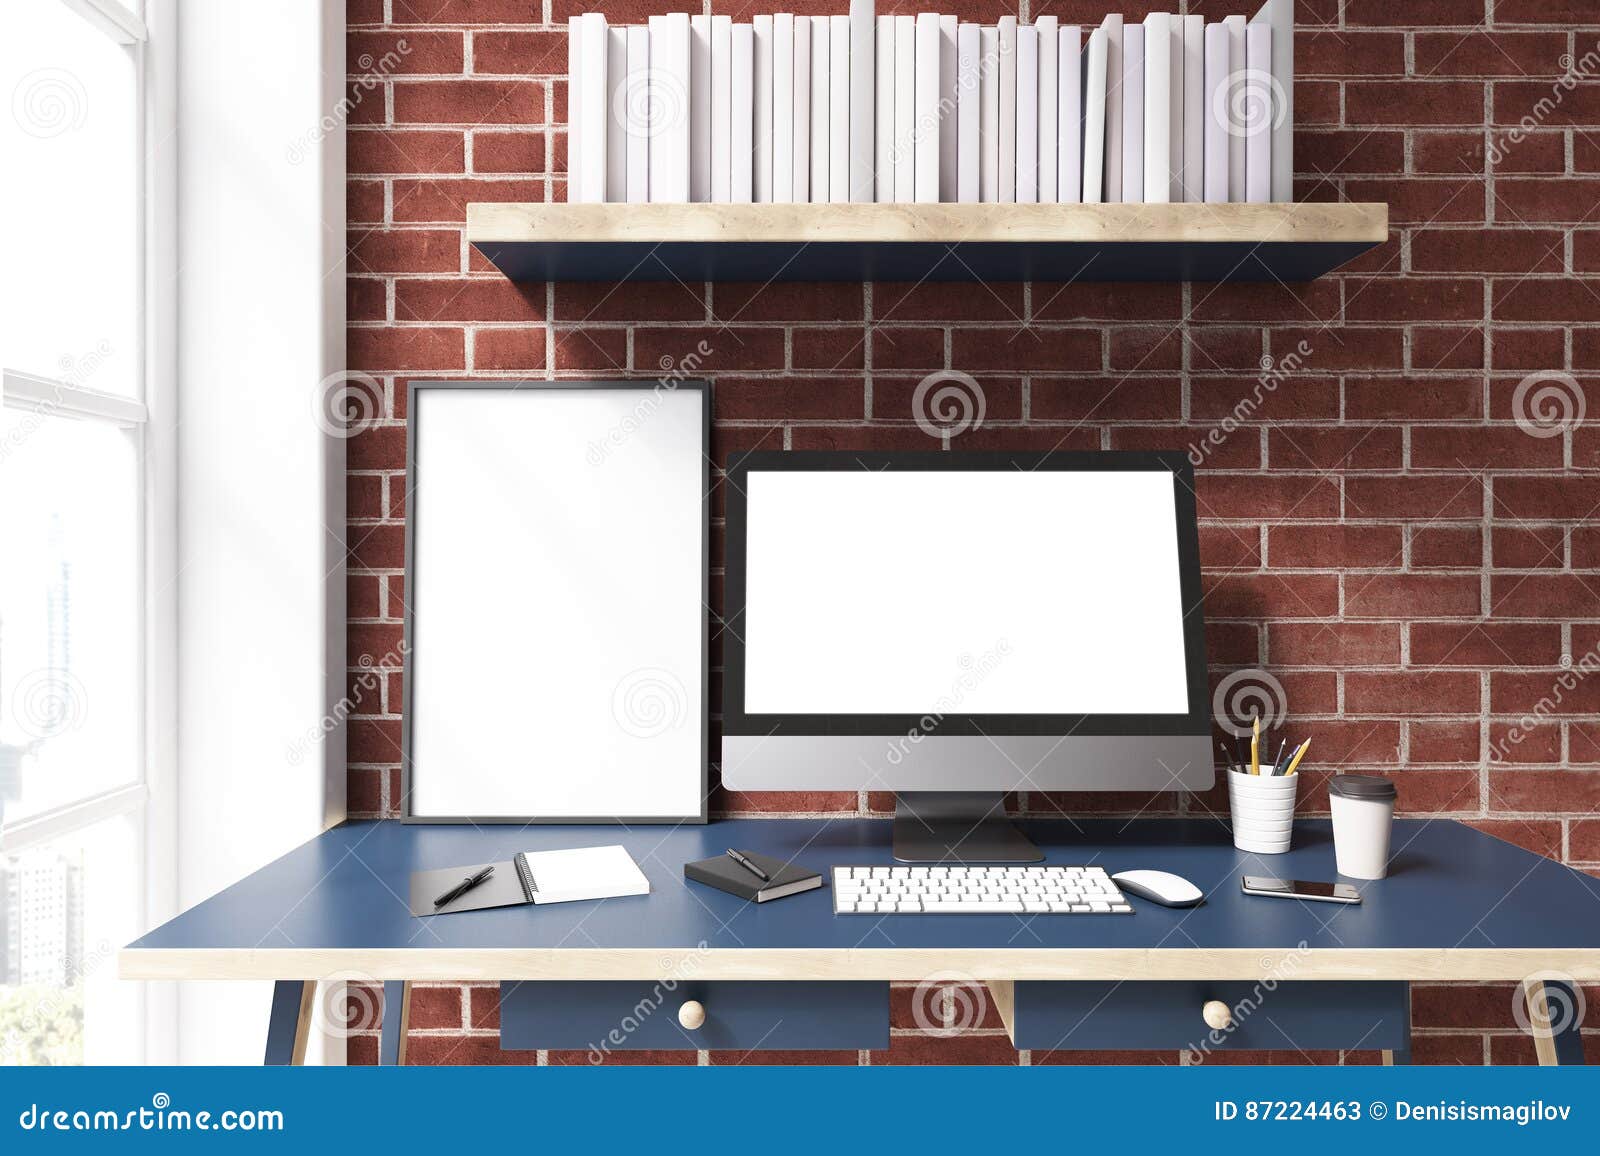 Computer Monitor Against Brick Wall Stock Illustration